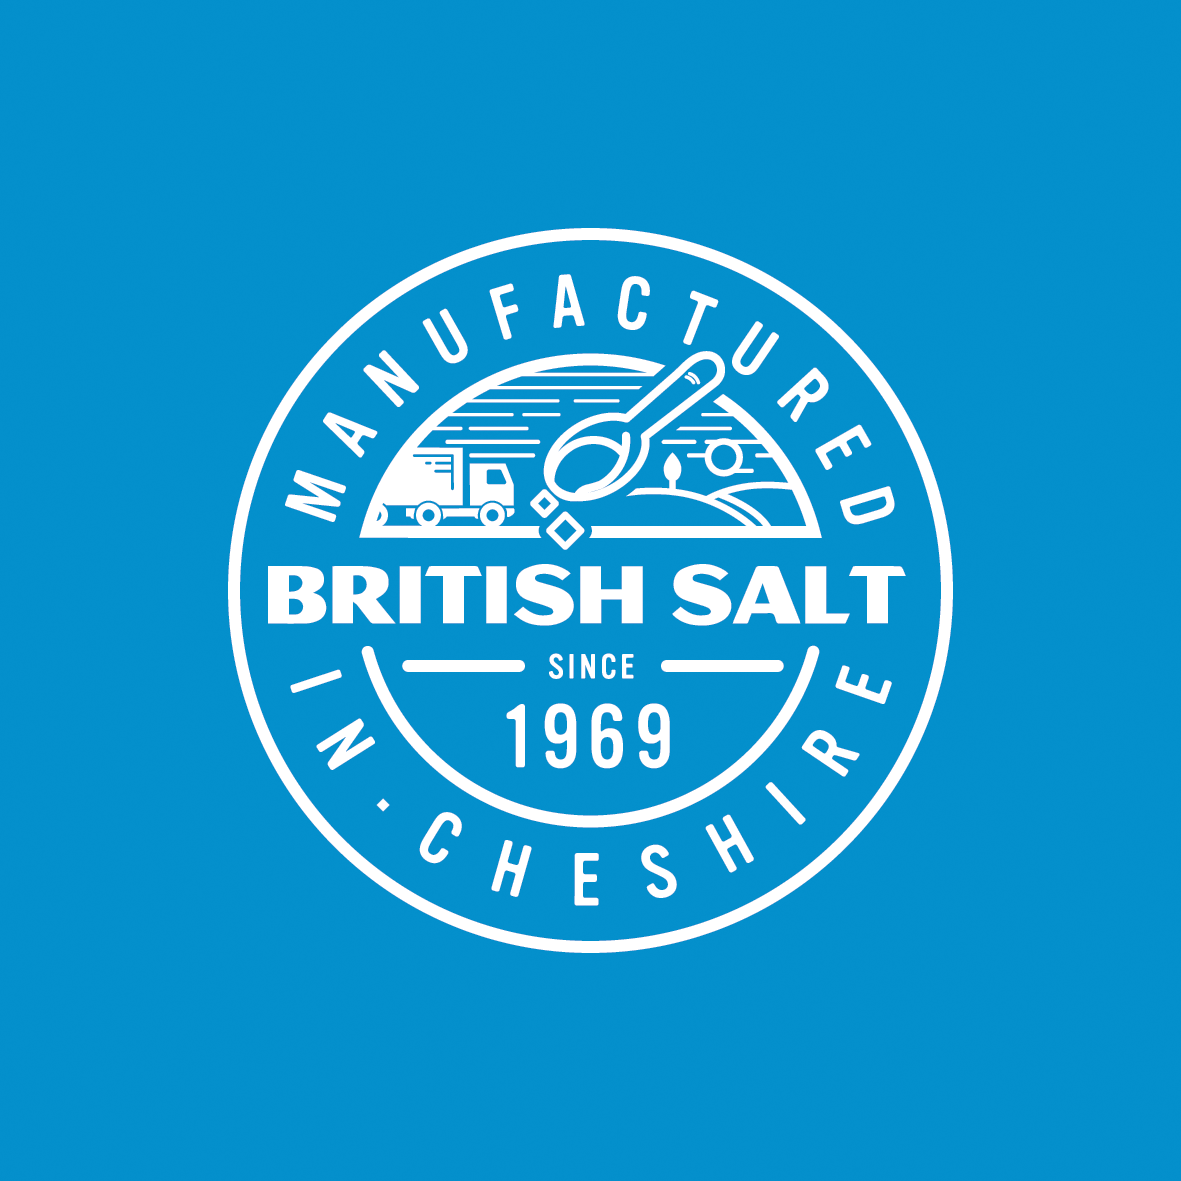 british salt